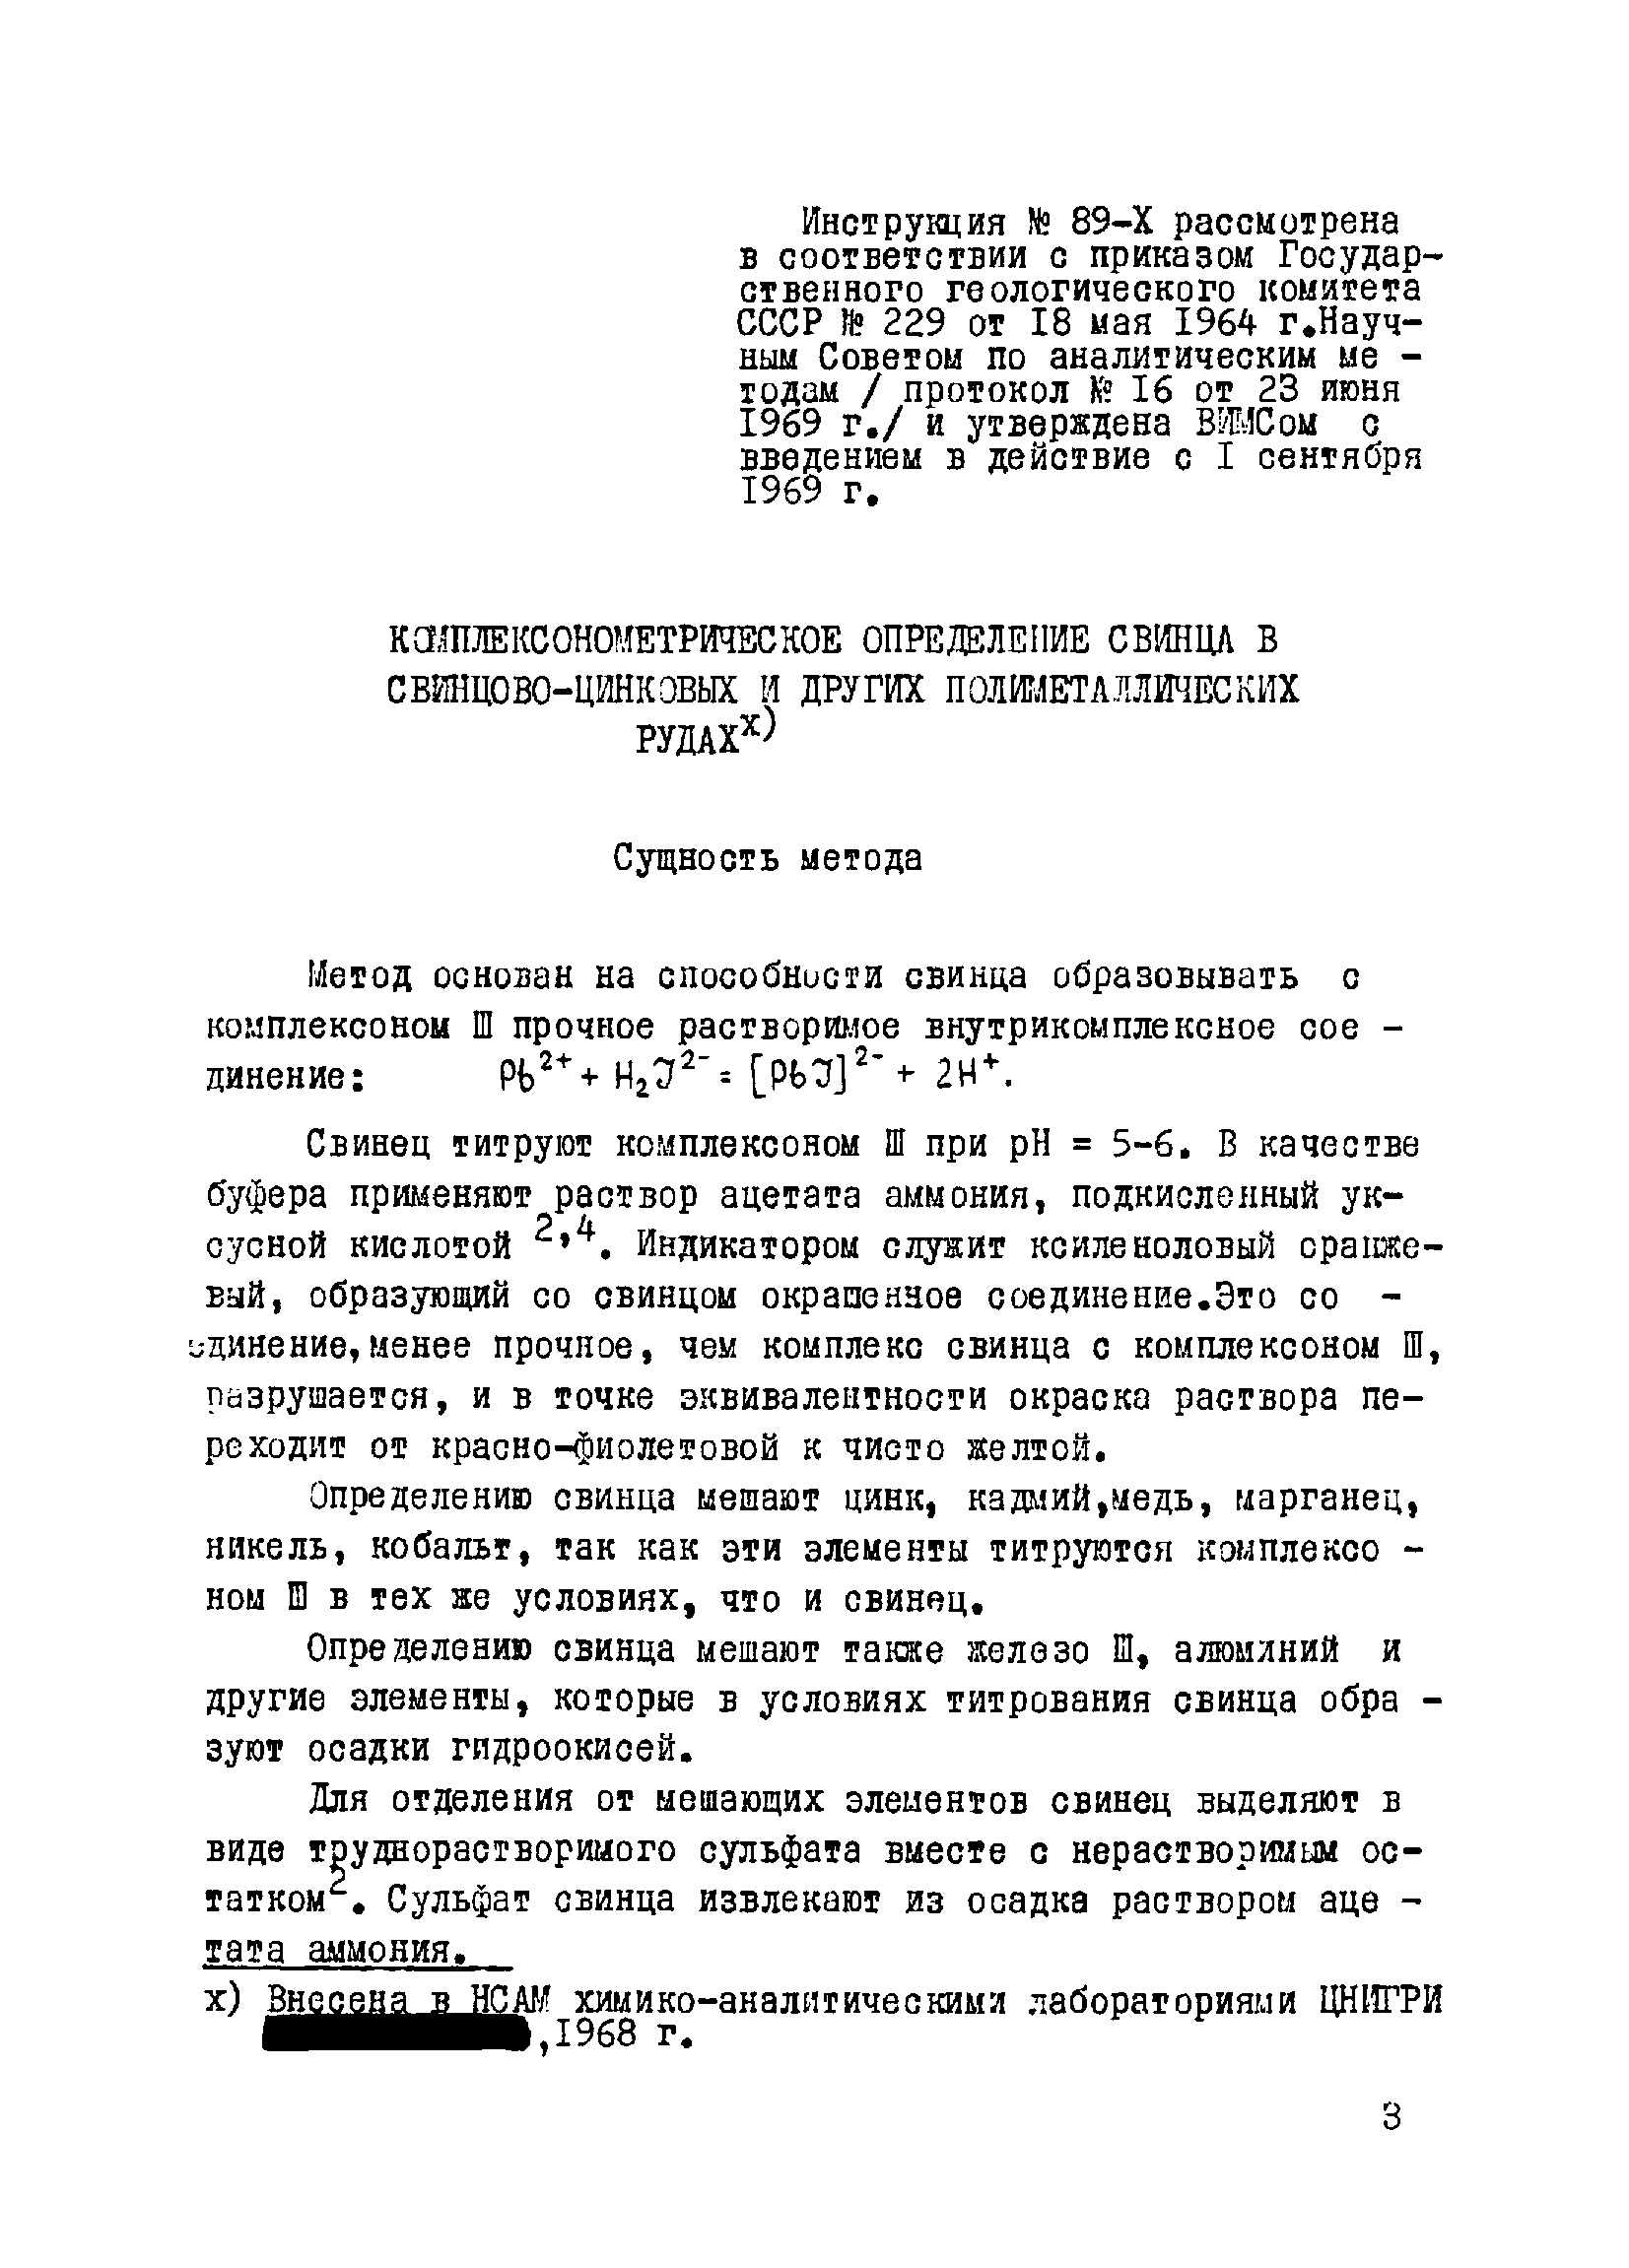 Инструкция НСАМ 89-Х